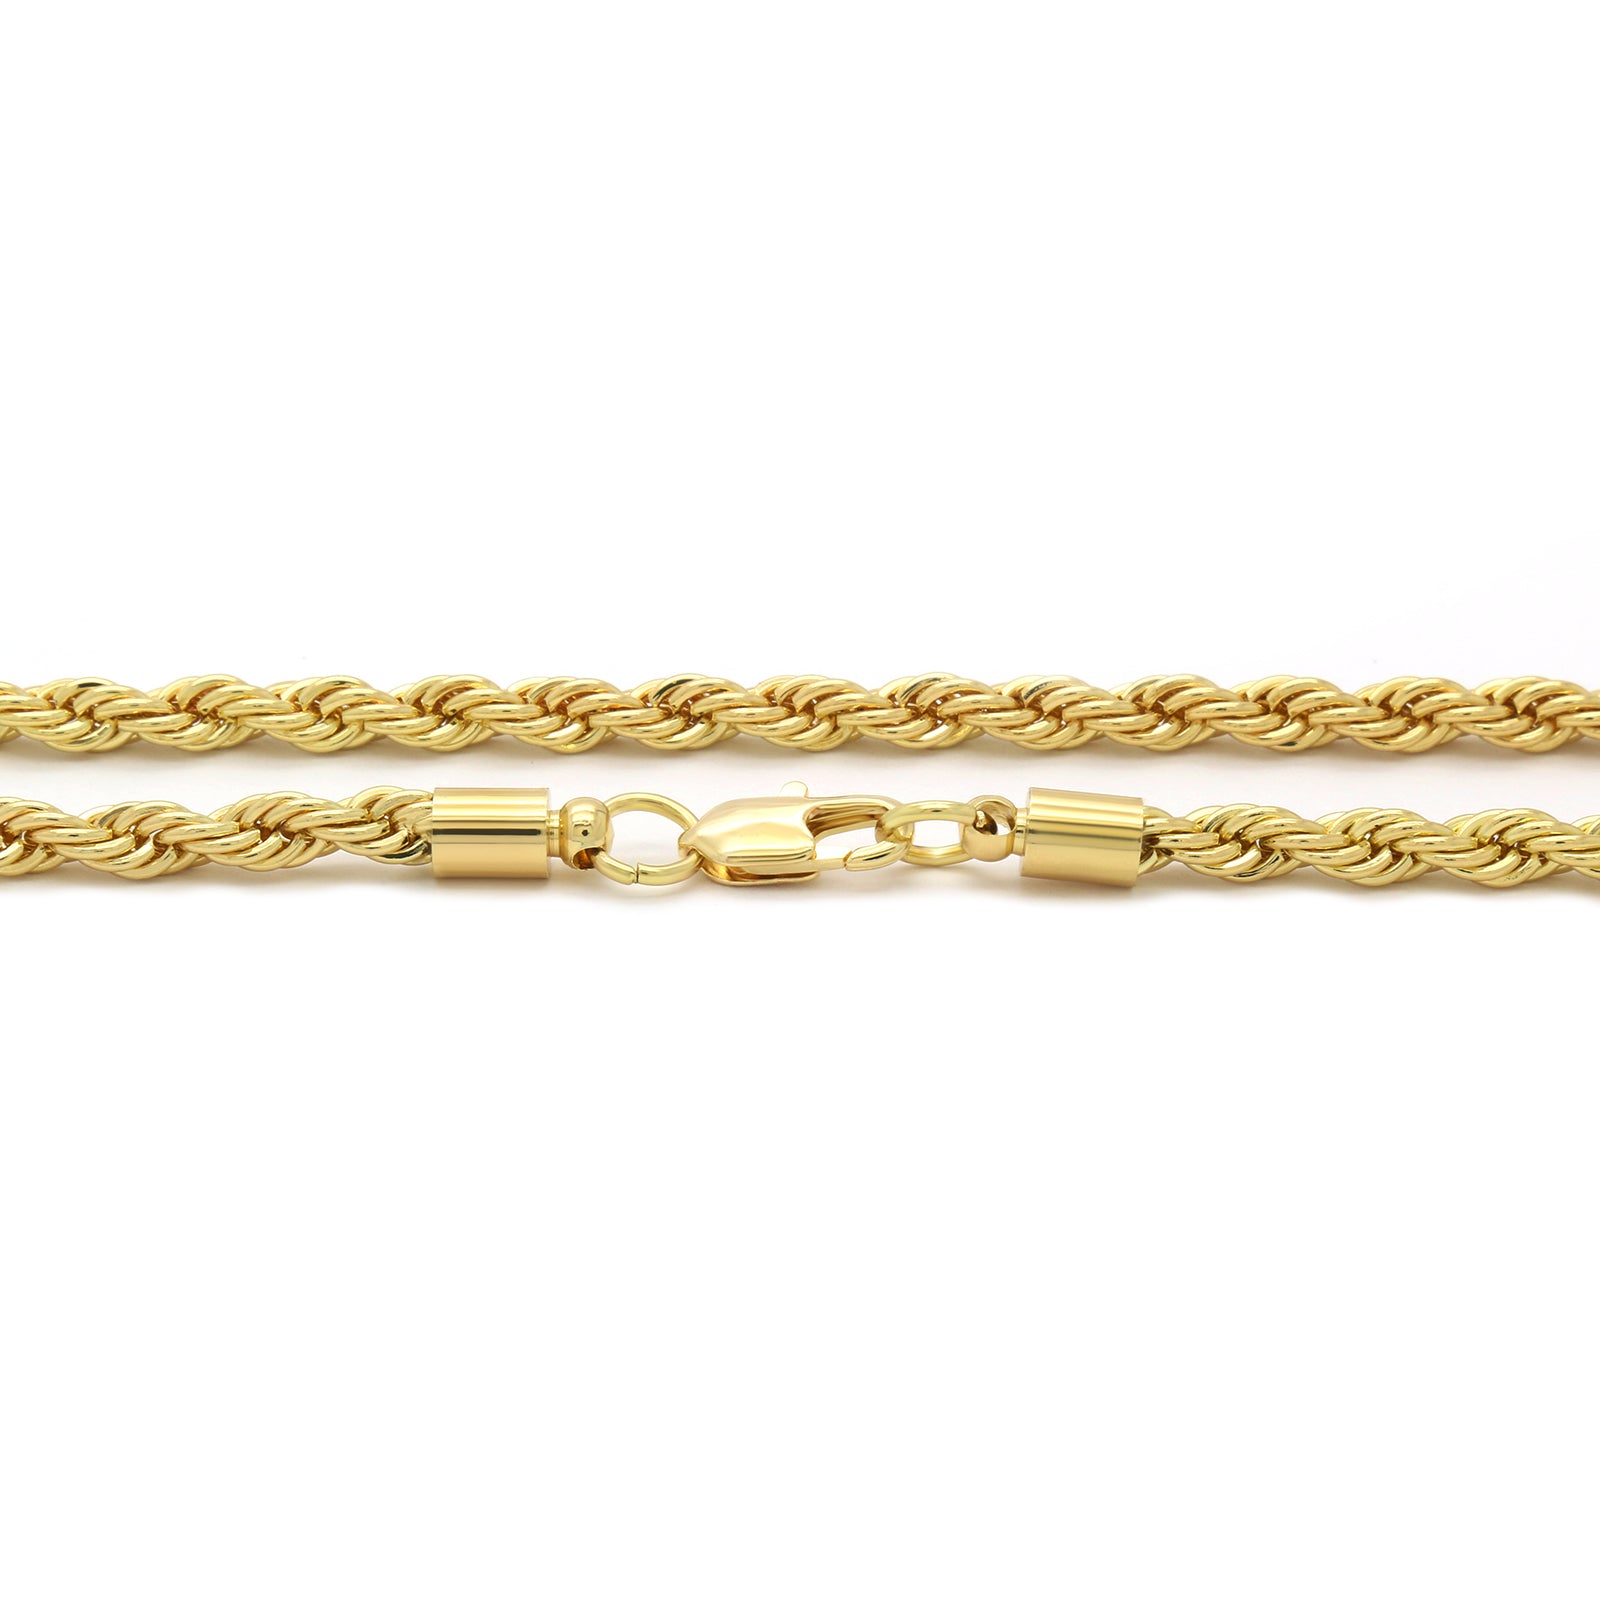 TENNIS CHAIN & GOLD NBA JUMPMAN Necklace  BlingKingstar Jewelry –  BlingKingStar